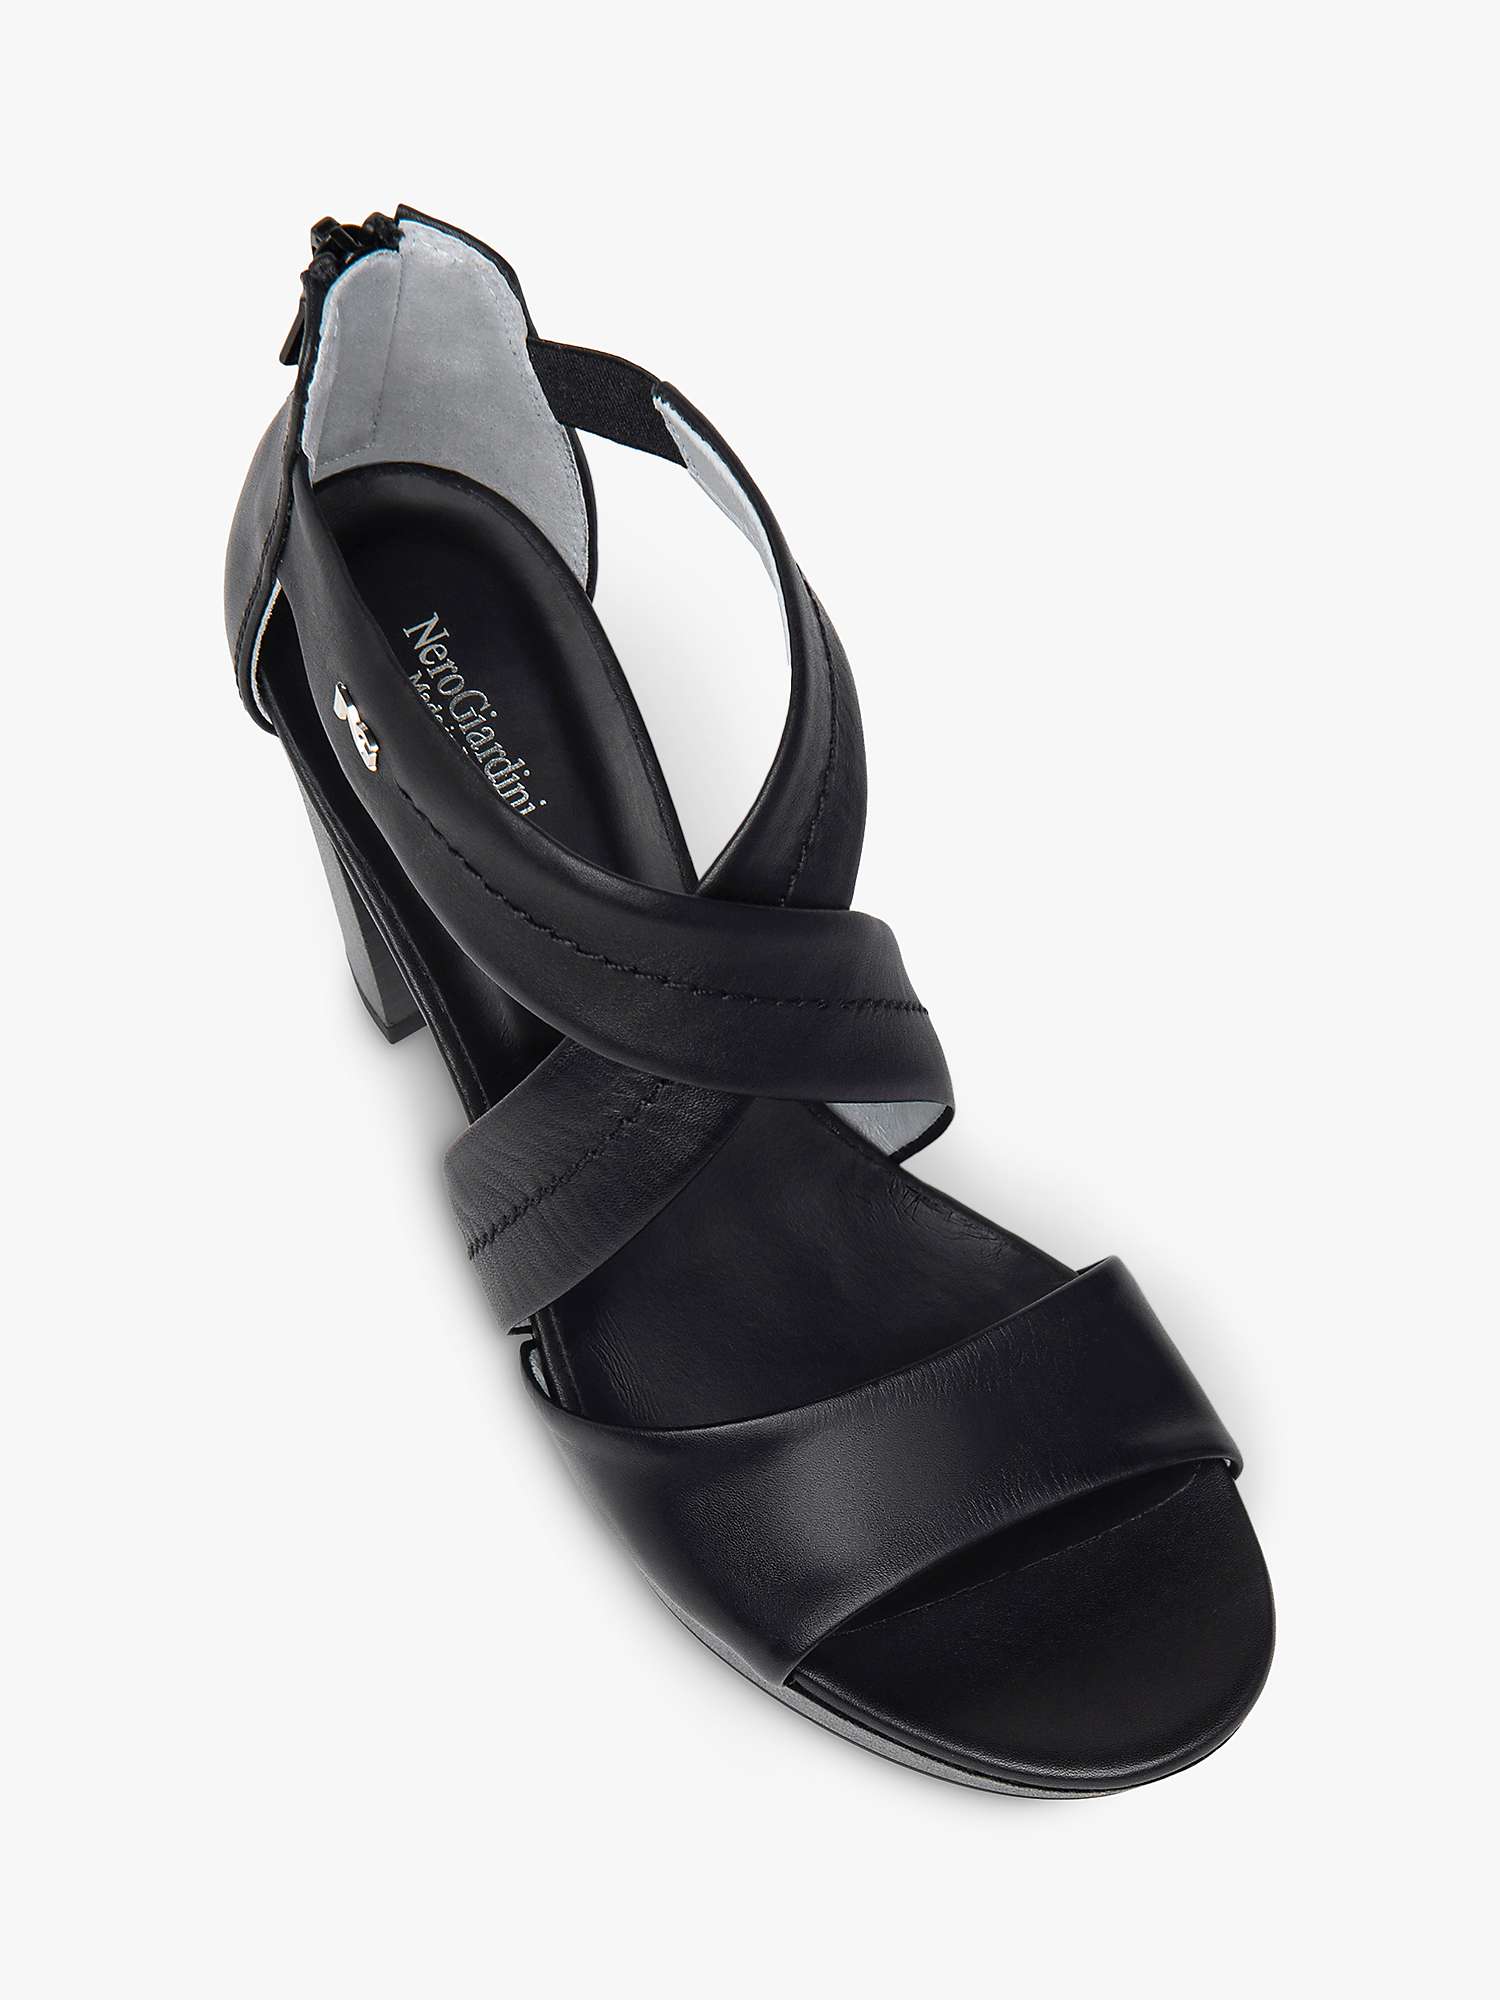 Buy NeroGiardini Leather Heeled Sandals, Black Online at johnlewis.com